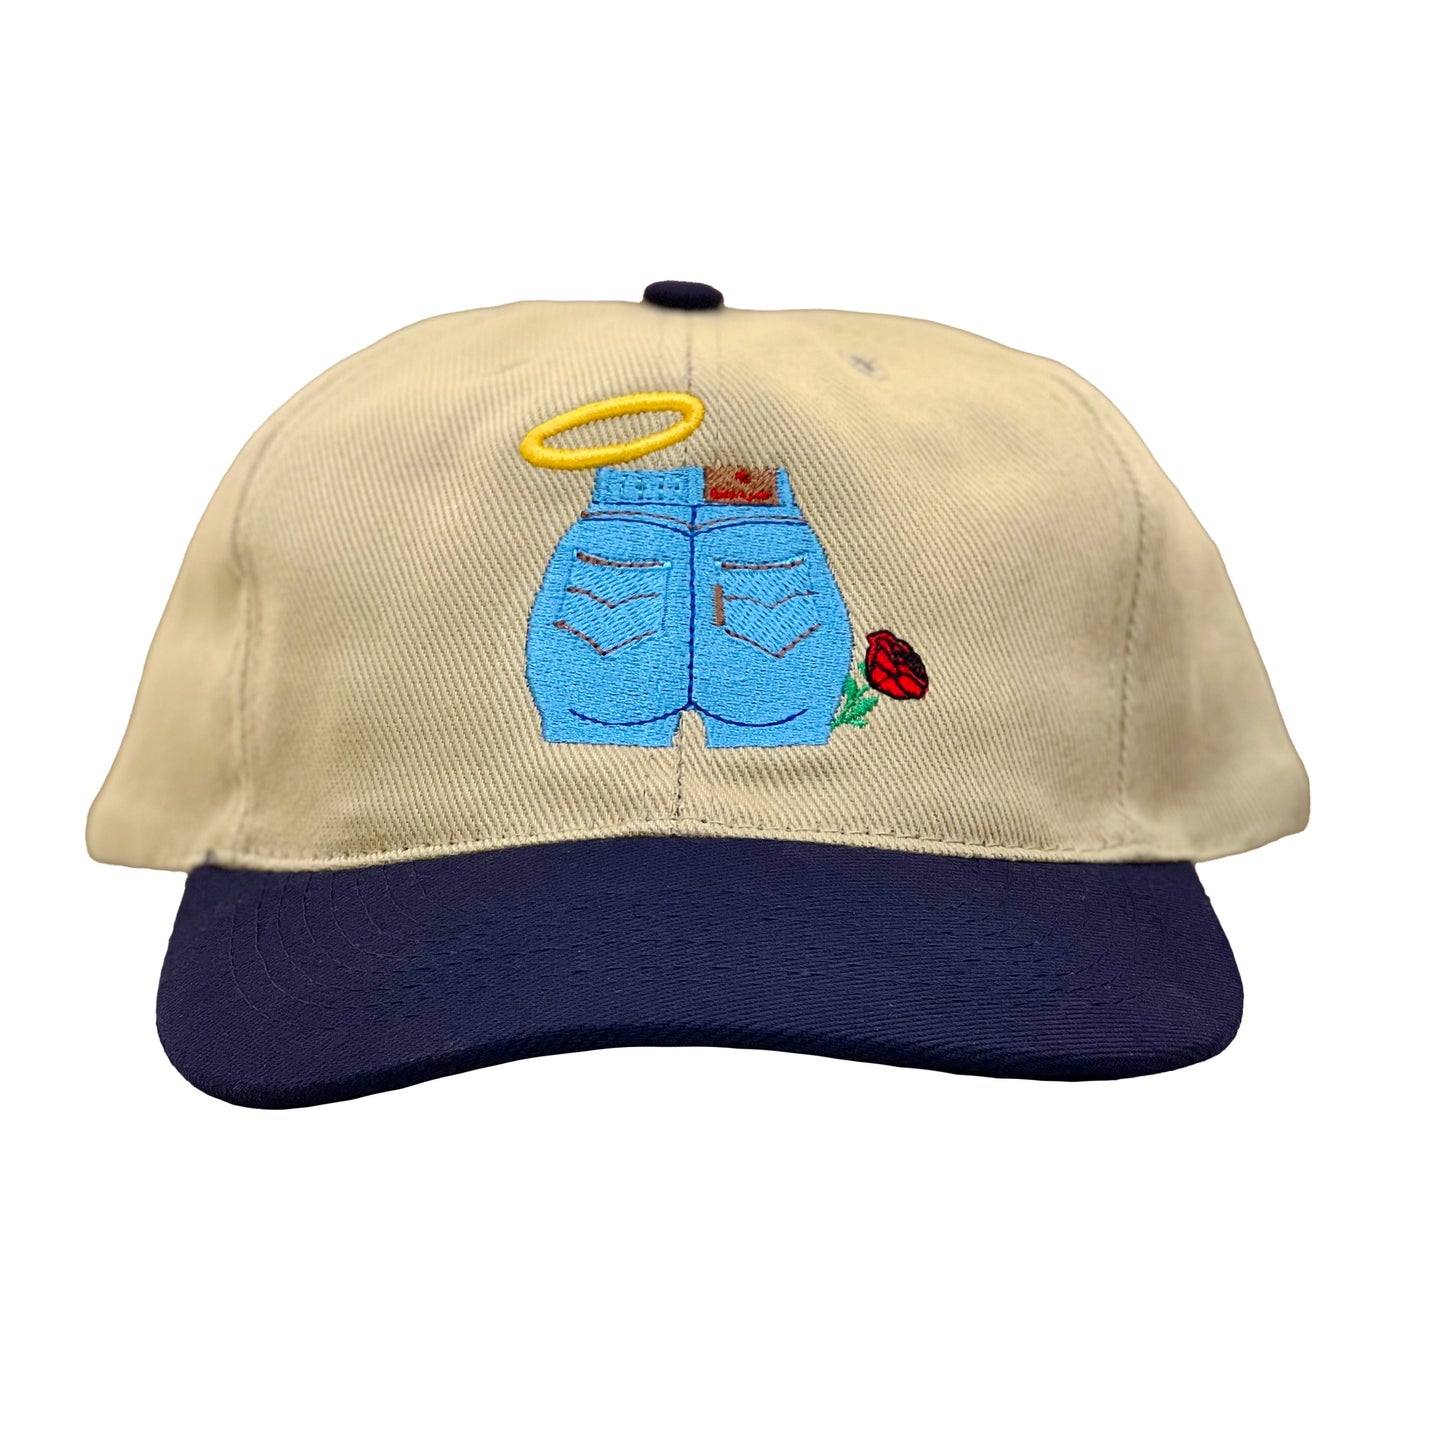 BOOTY CAP